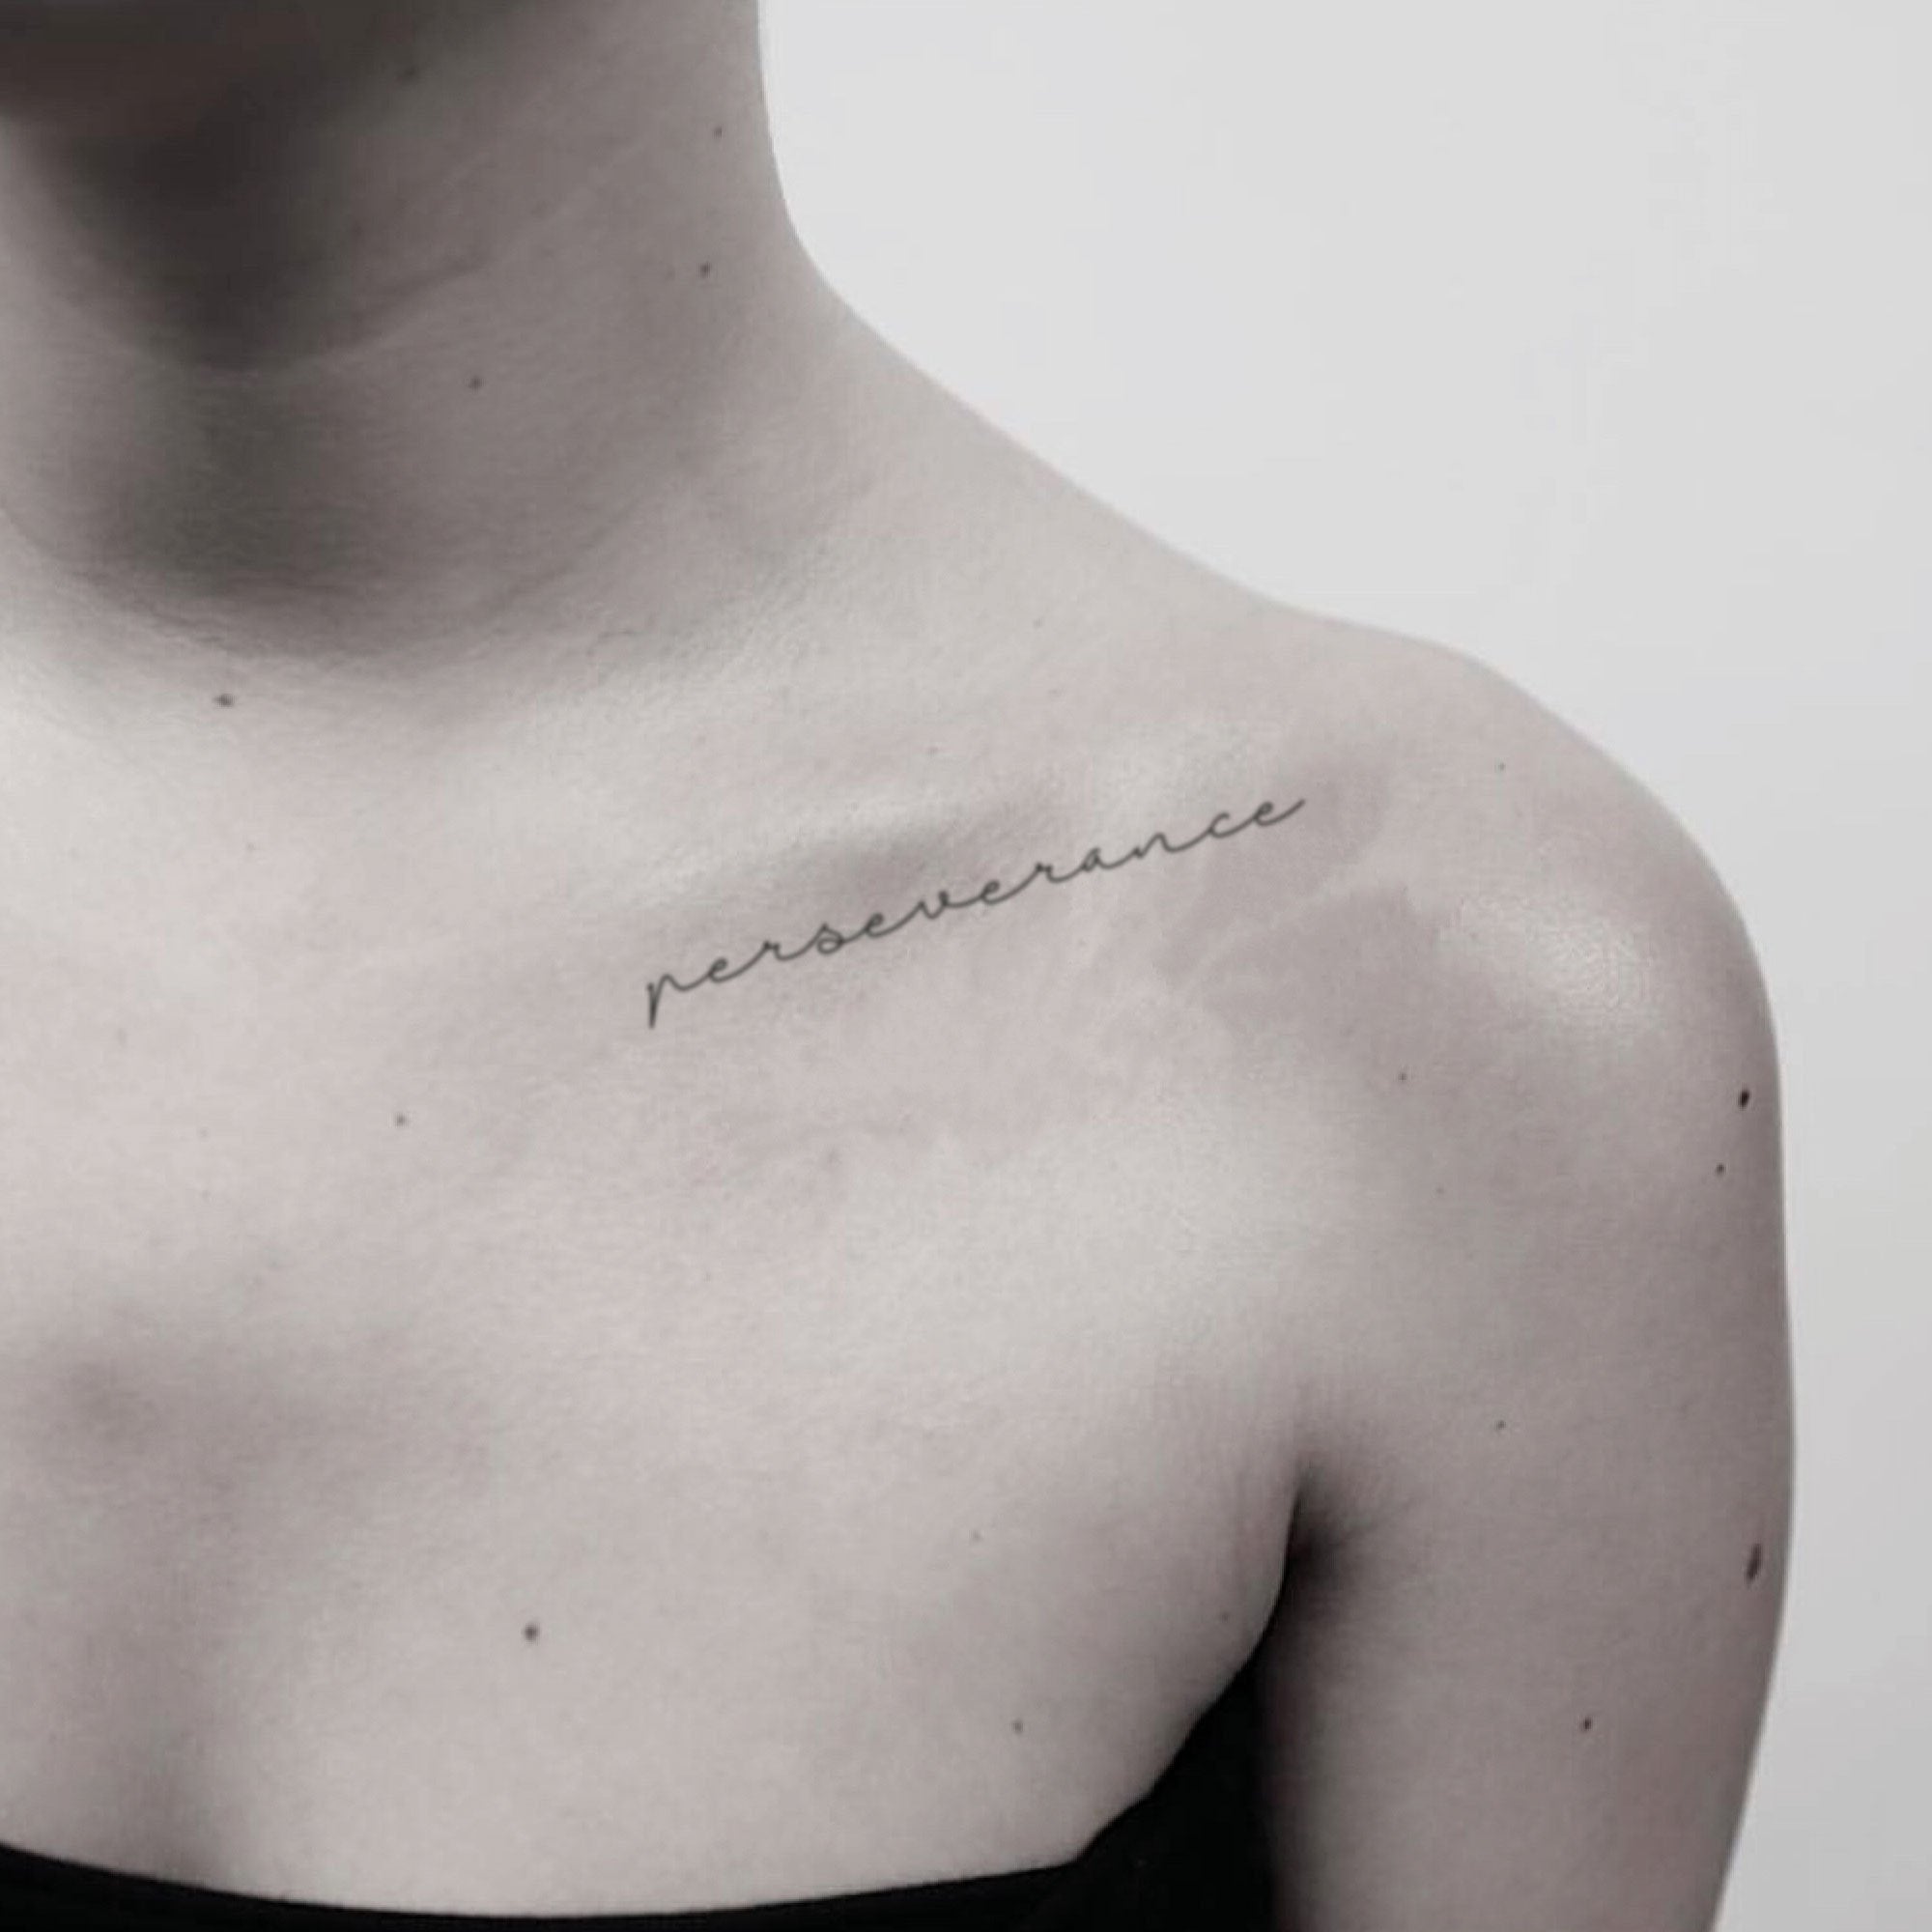 perseverance tattoo on shoulder